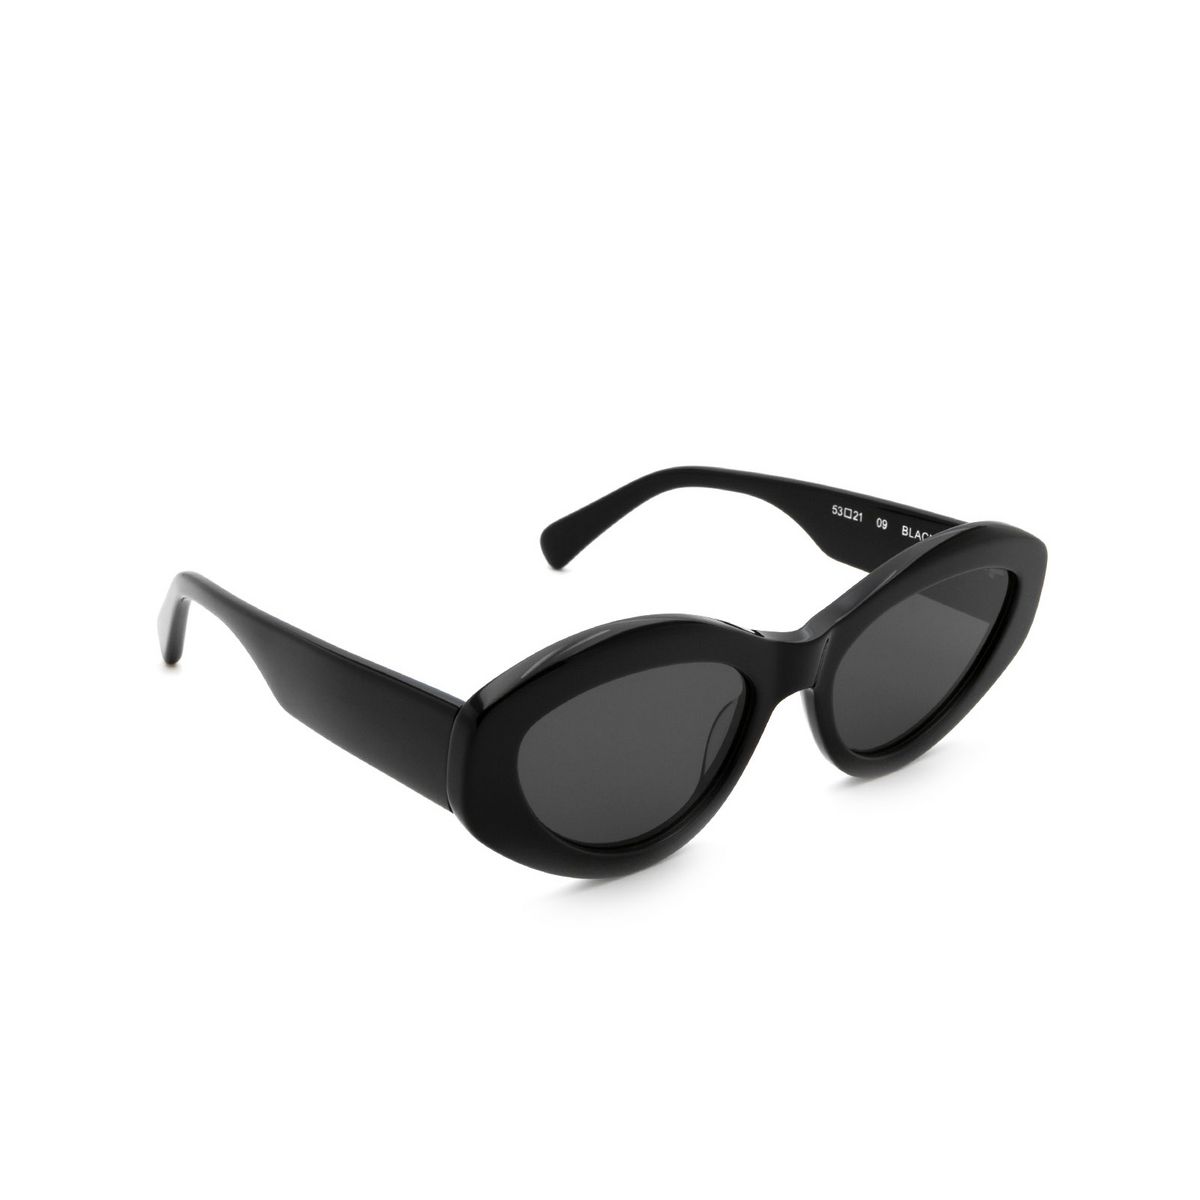 Chimi® Cat-eye Sunglasses: 09 color Black - three-quarters view.